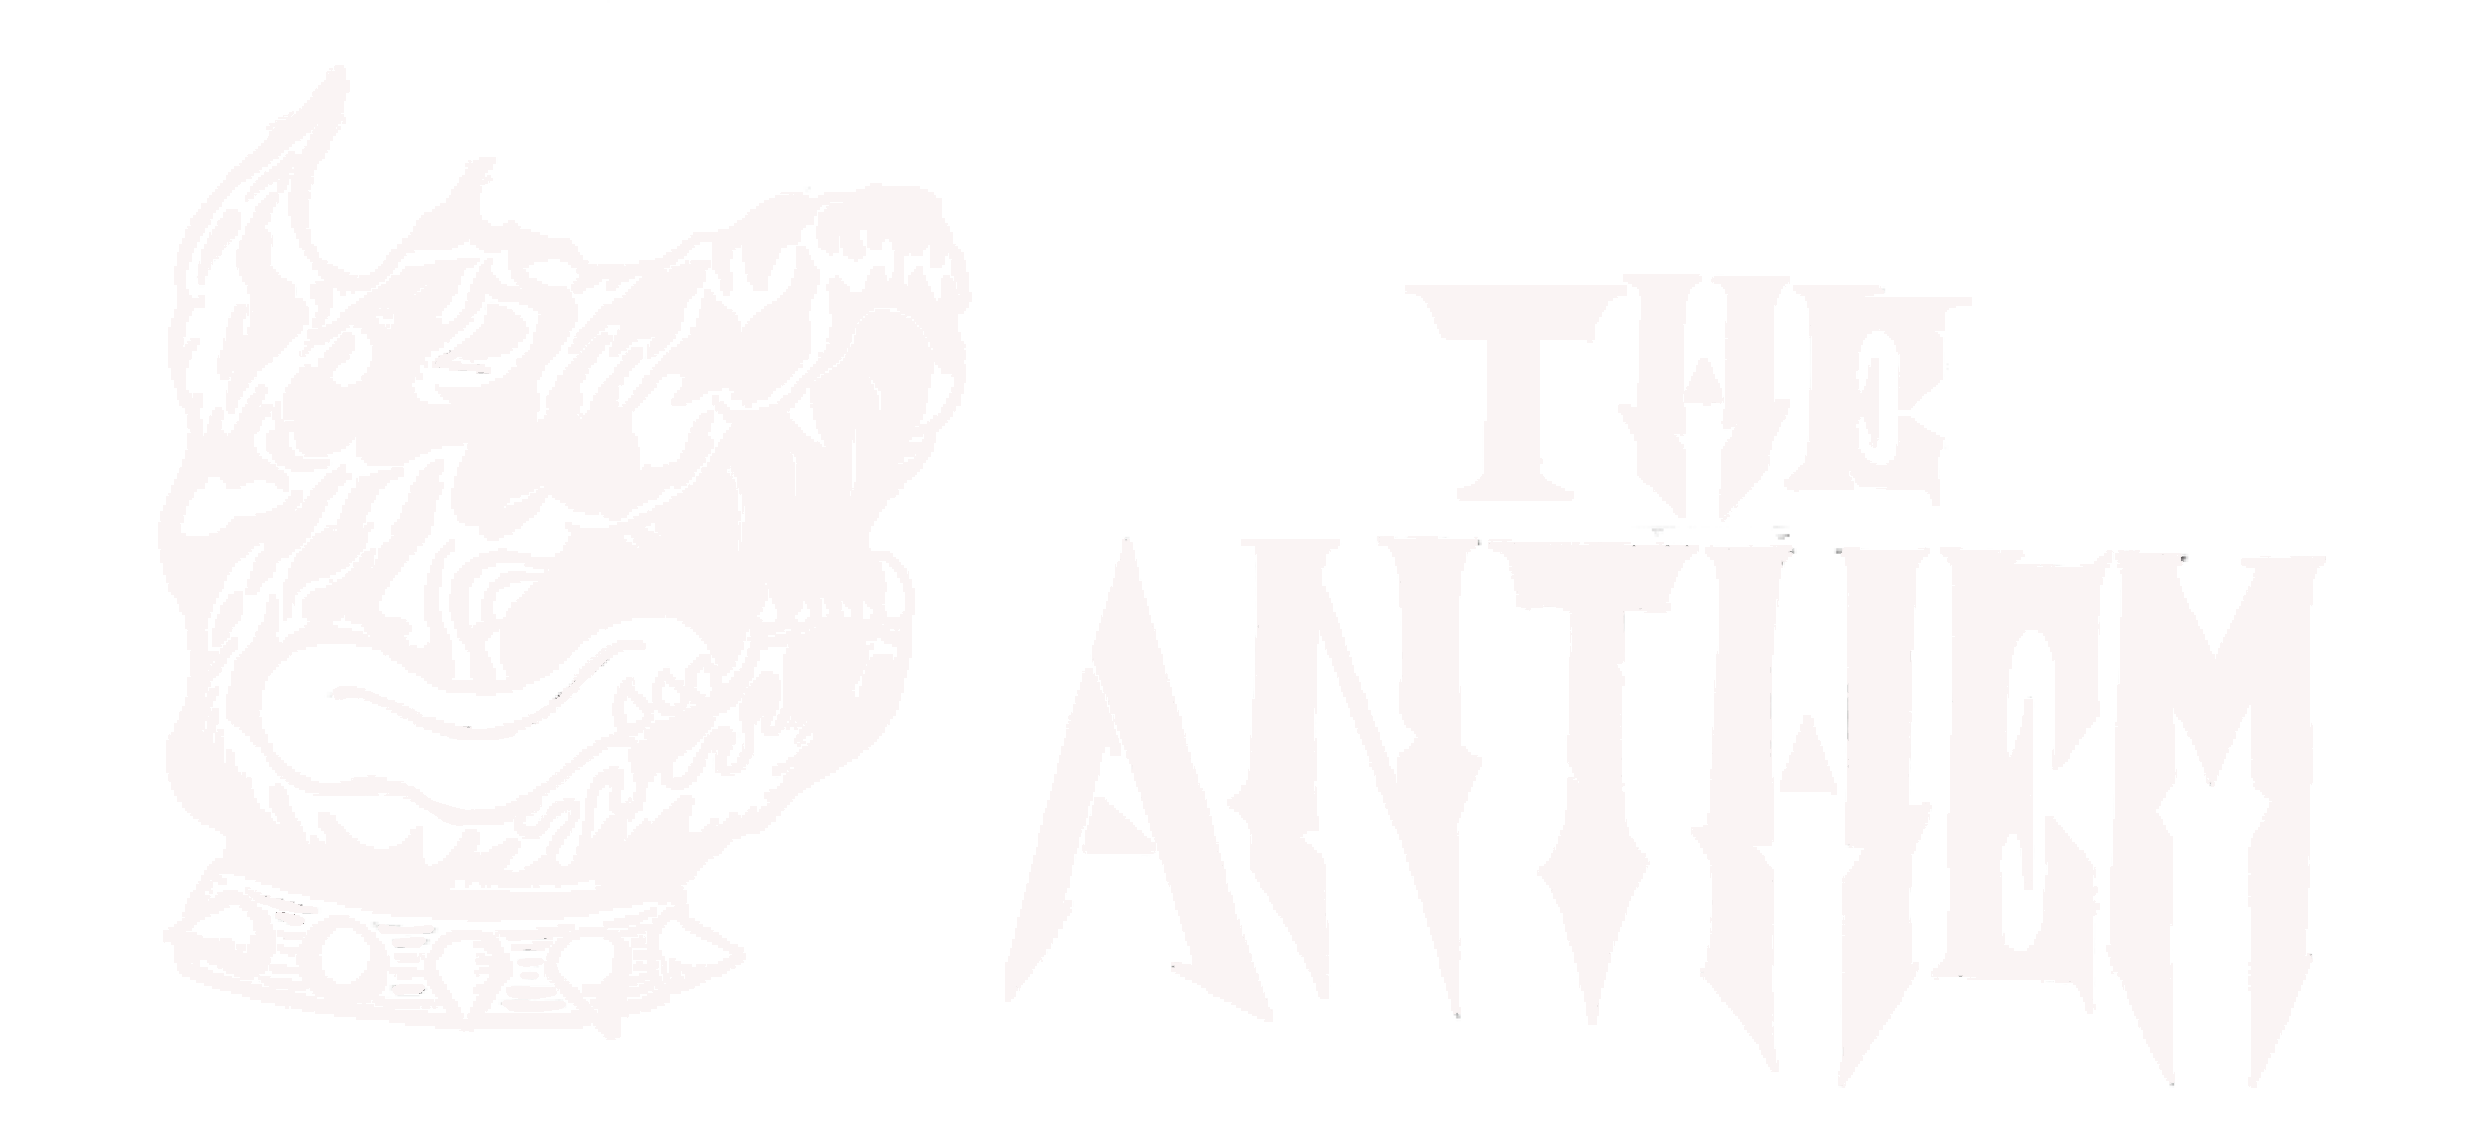 THE ANTHEM